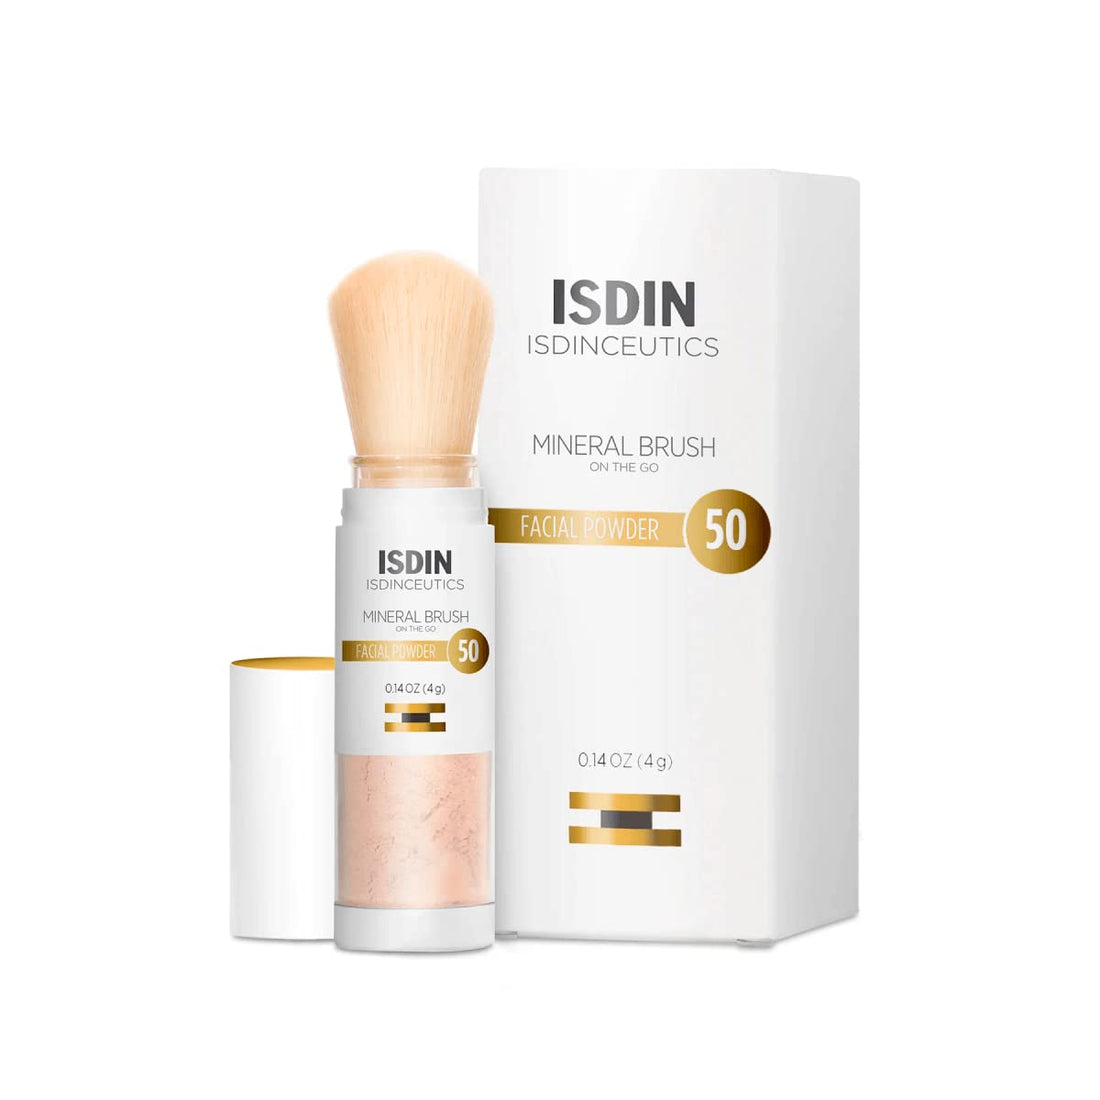 ISDIN Isdinceutics Mineral Brush Facial Powder SPF 50 ISDIN 0.14 oz. Shop Skin Type Solutions